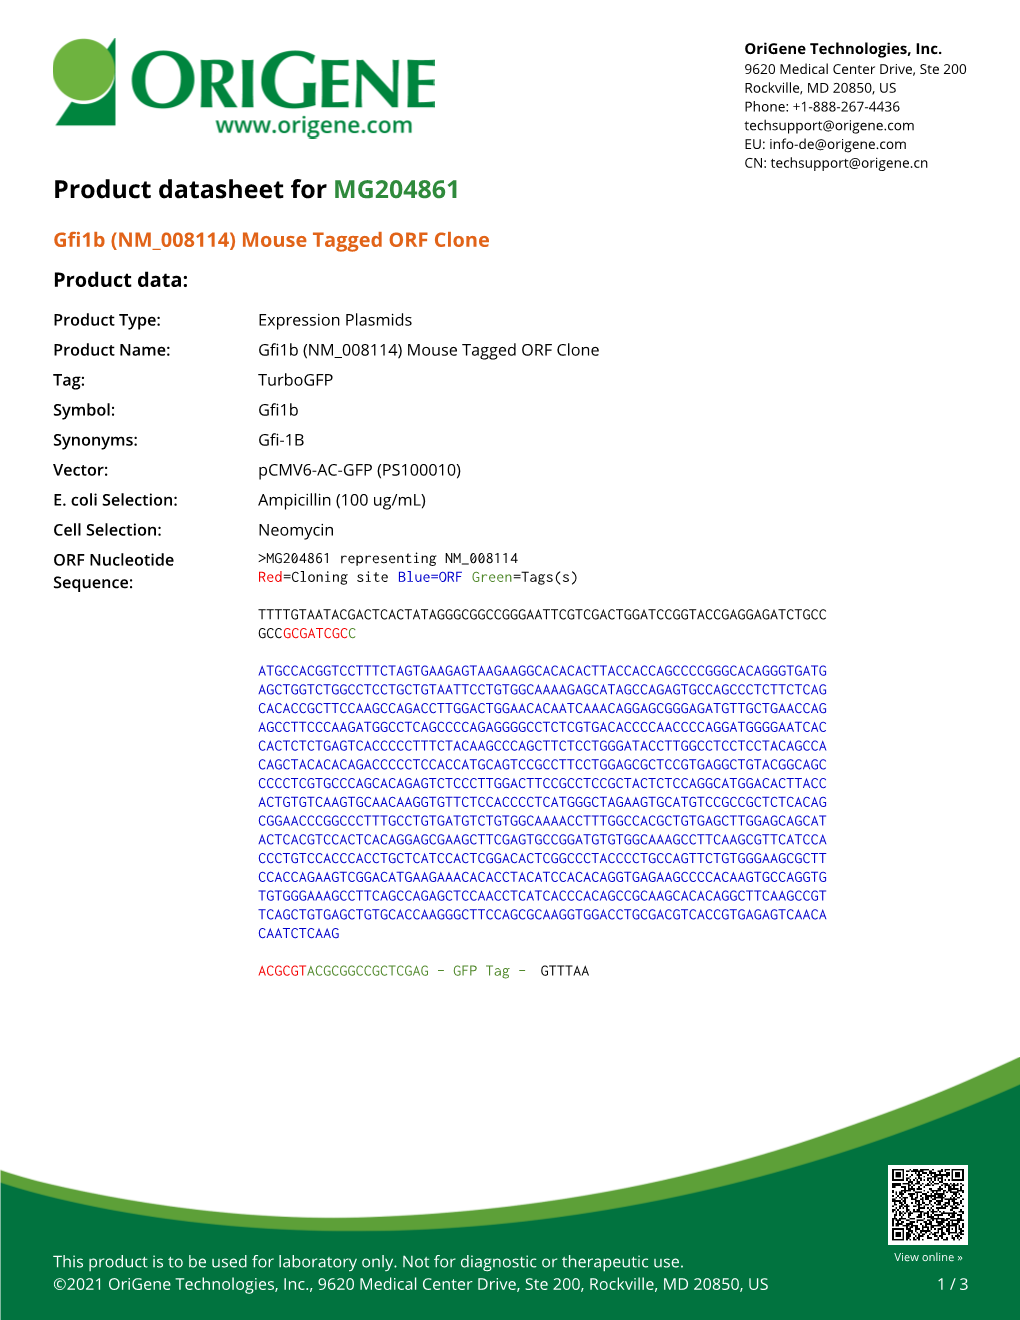 Gfi1b (NM 008114) Mouse Tagged ORF Clone – MG204861 | Origene